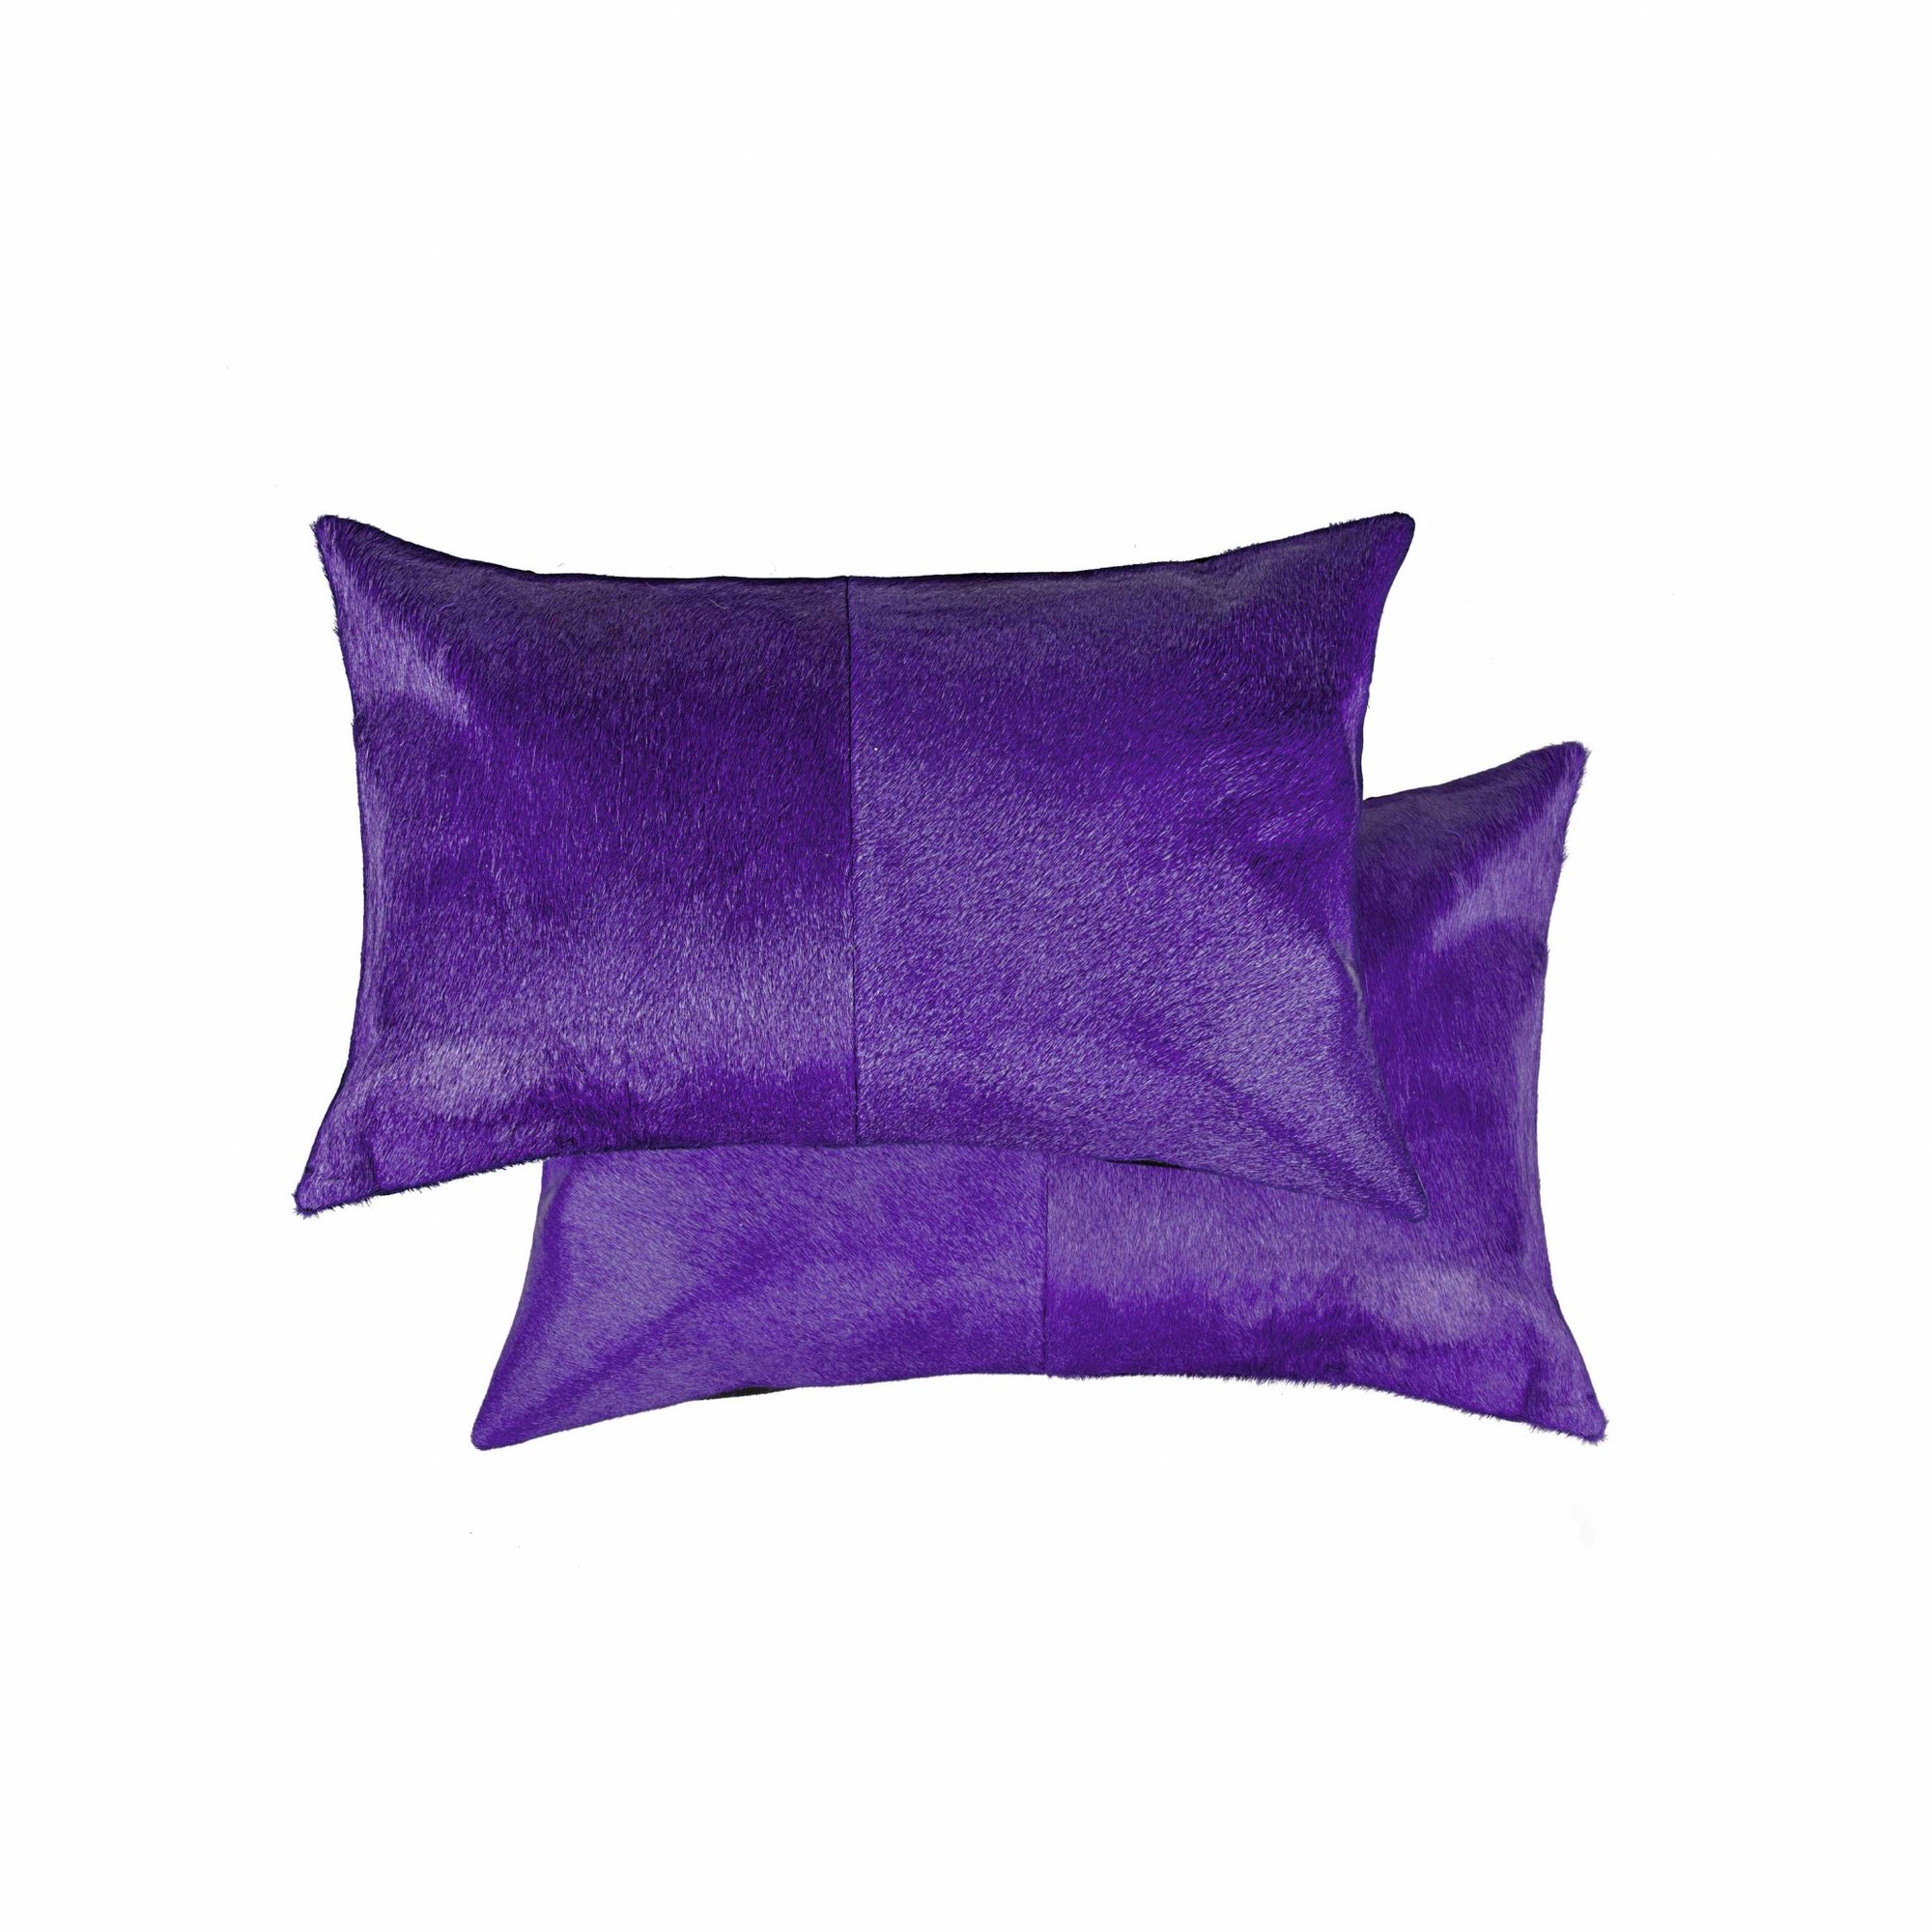 12" x 20" x 5" Purple, Cowhide - Pillow 2-Pack